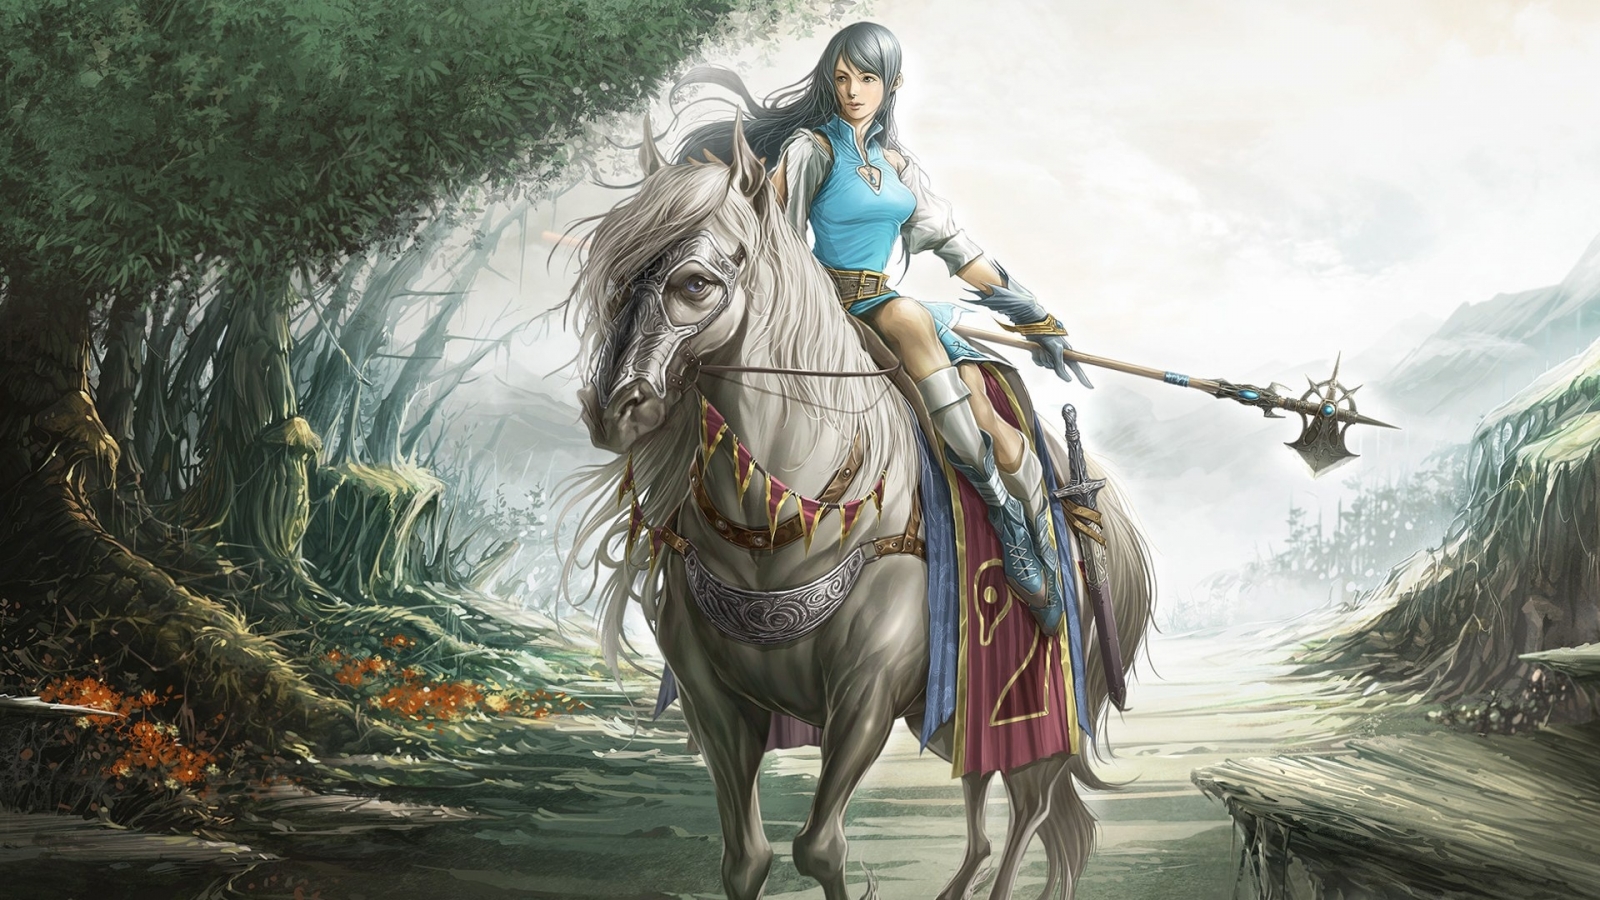 Fantasy Girl Rider for 1600 x 900 HDTV resolution